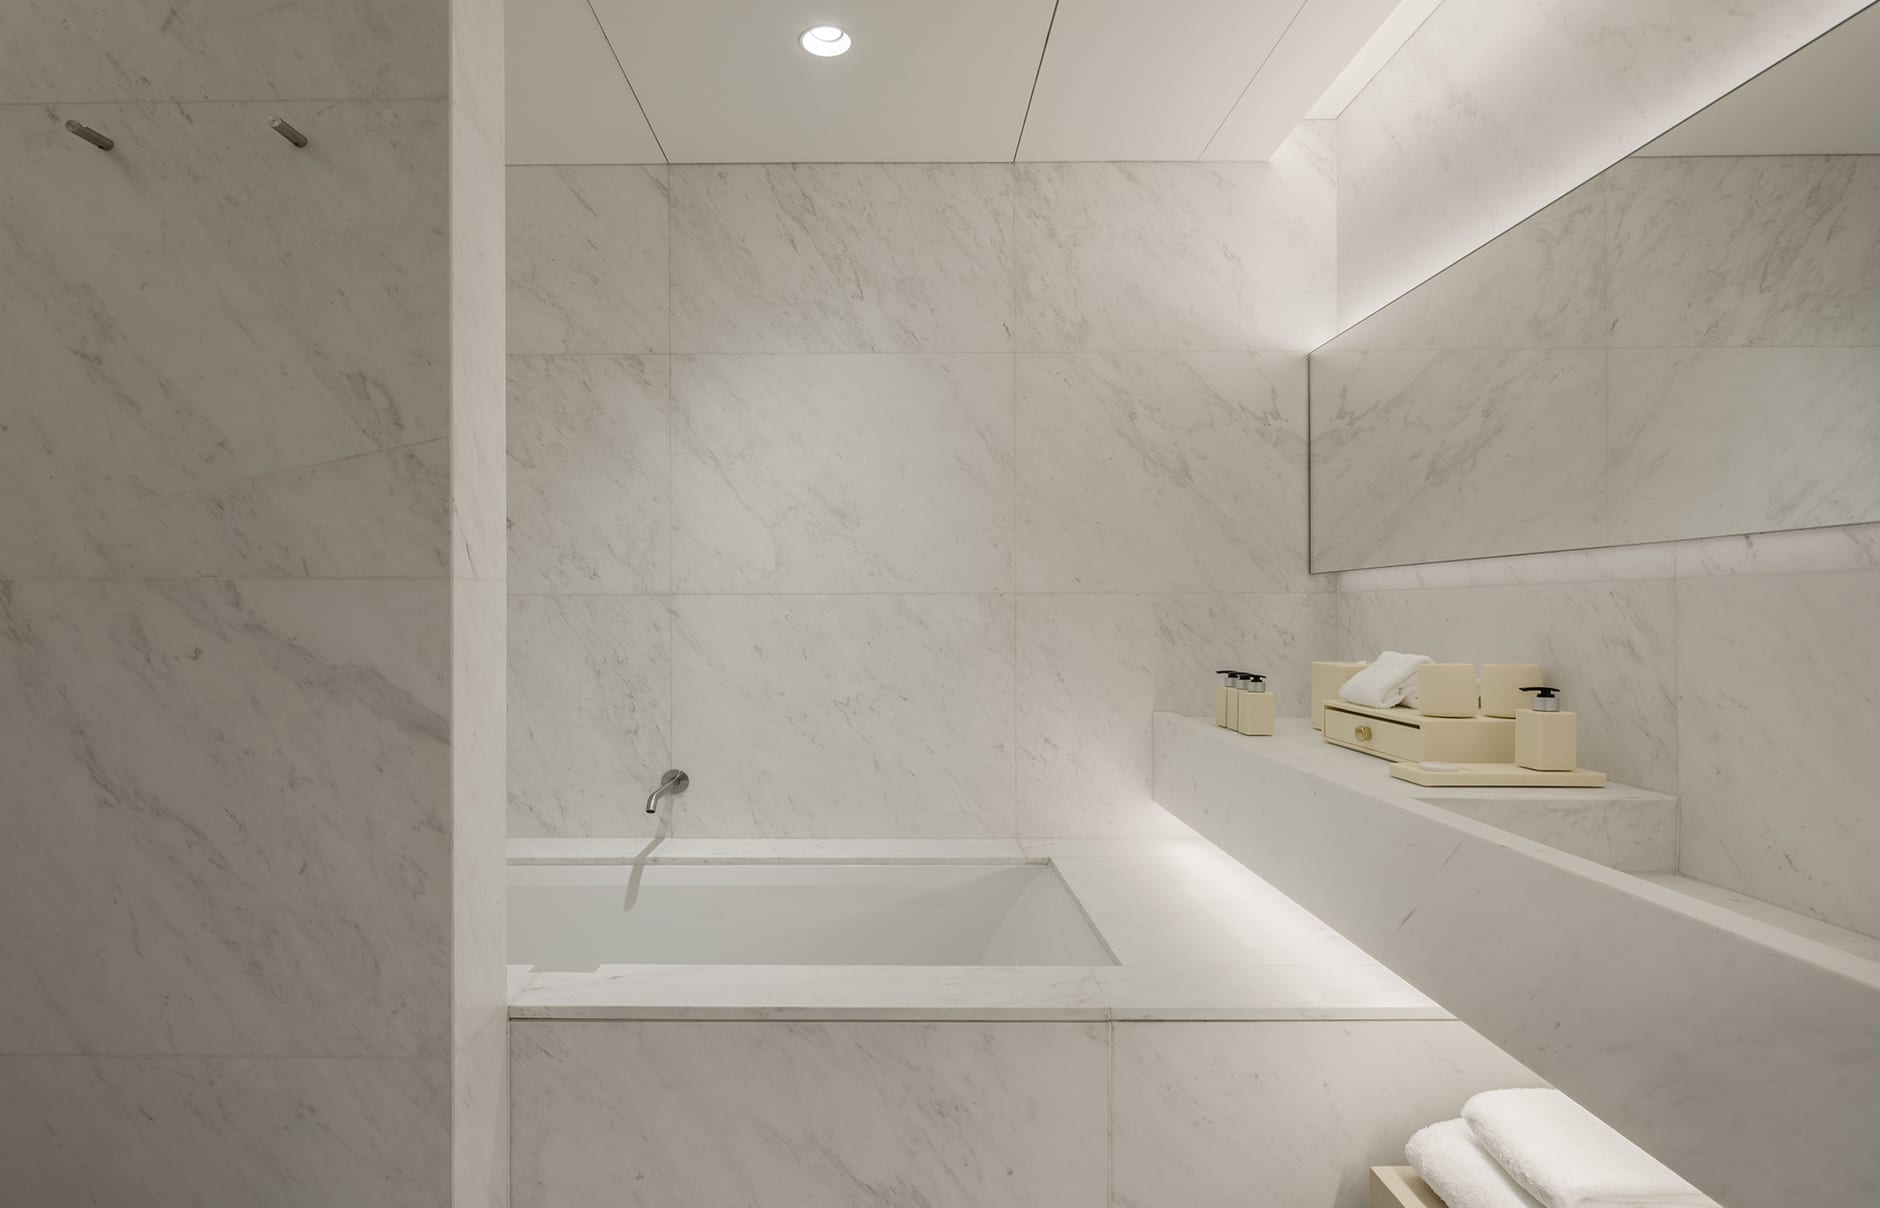 Six Senses Duxton, Singapore. Pearl Suite bathroom. Luxury Hotel Review by TravelPlusStyle. Photo © Six Senses Hotels Resorts Spas